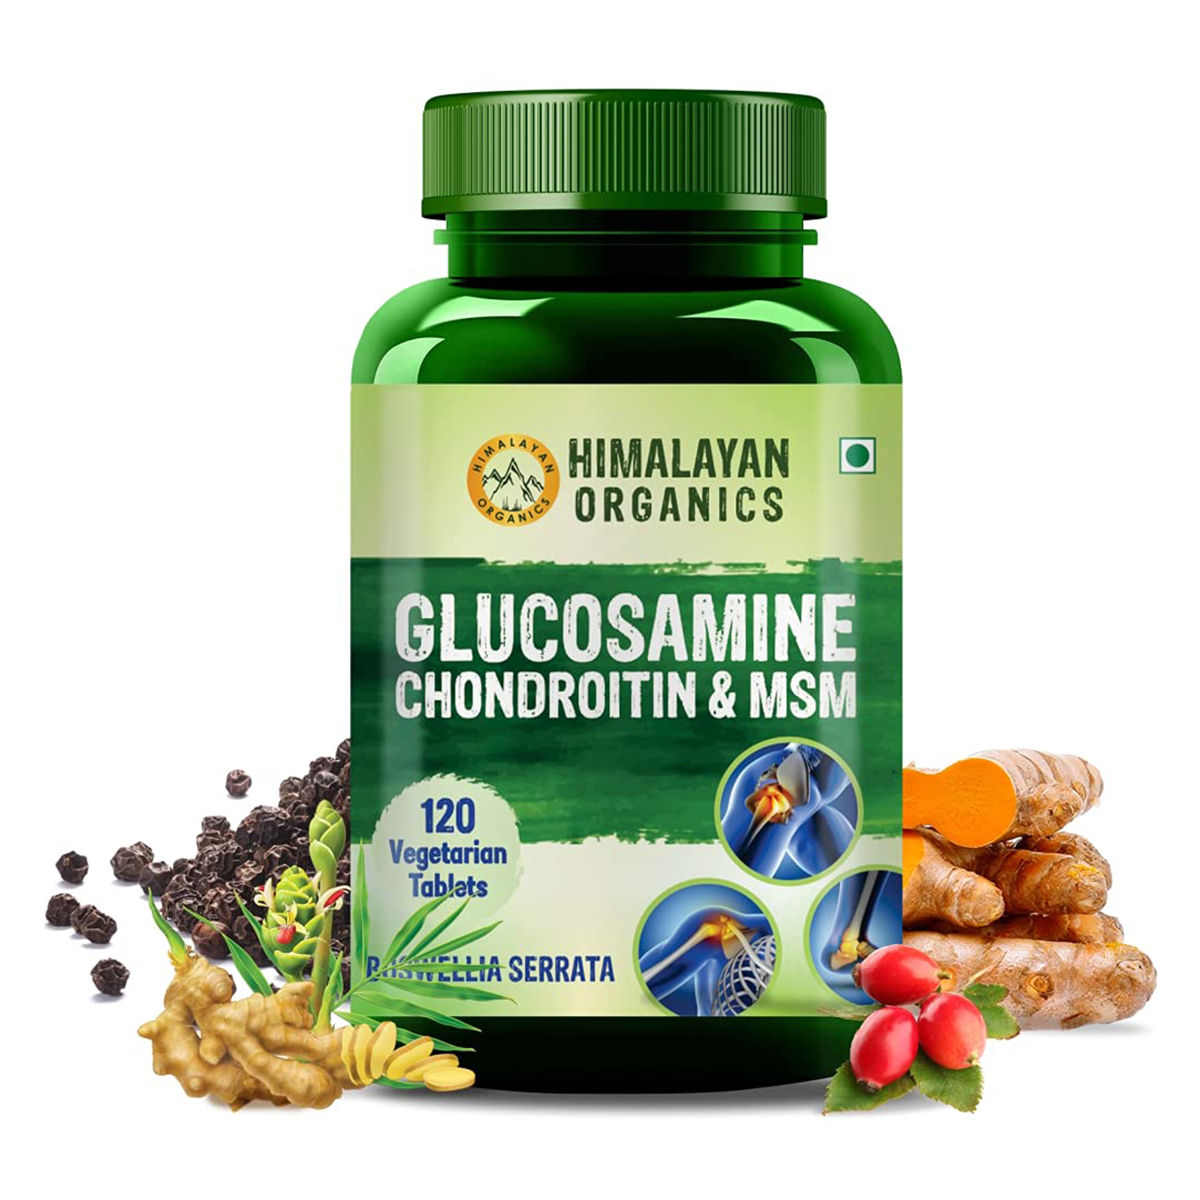 Buy Himalayan Organics Glucosamine Chondroitin & MSM, 120 Tablets Online